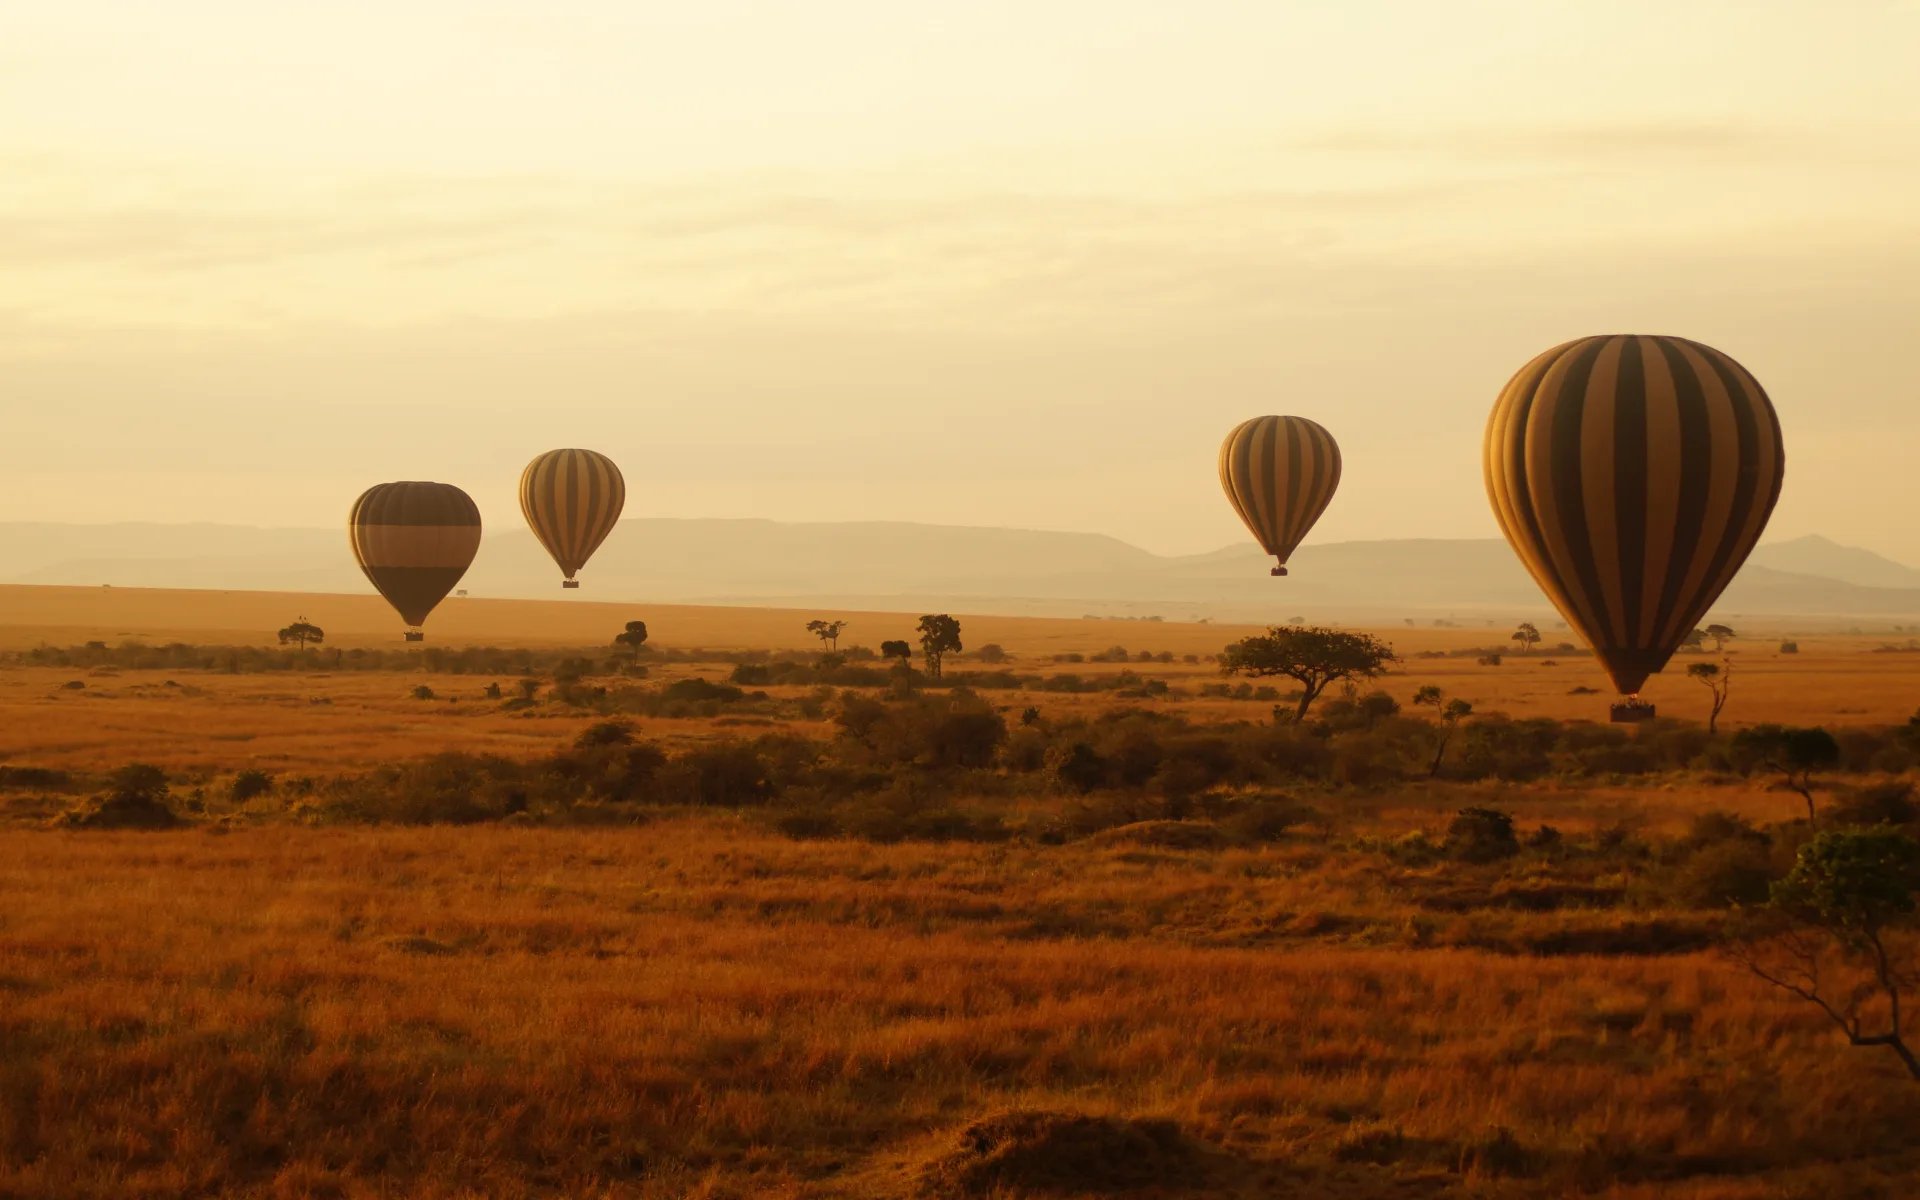 Several hot air balloons float over the Masai Mara savannah during an orange sunset.